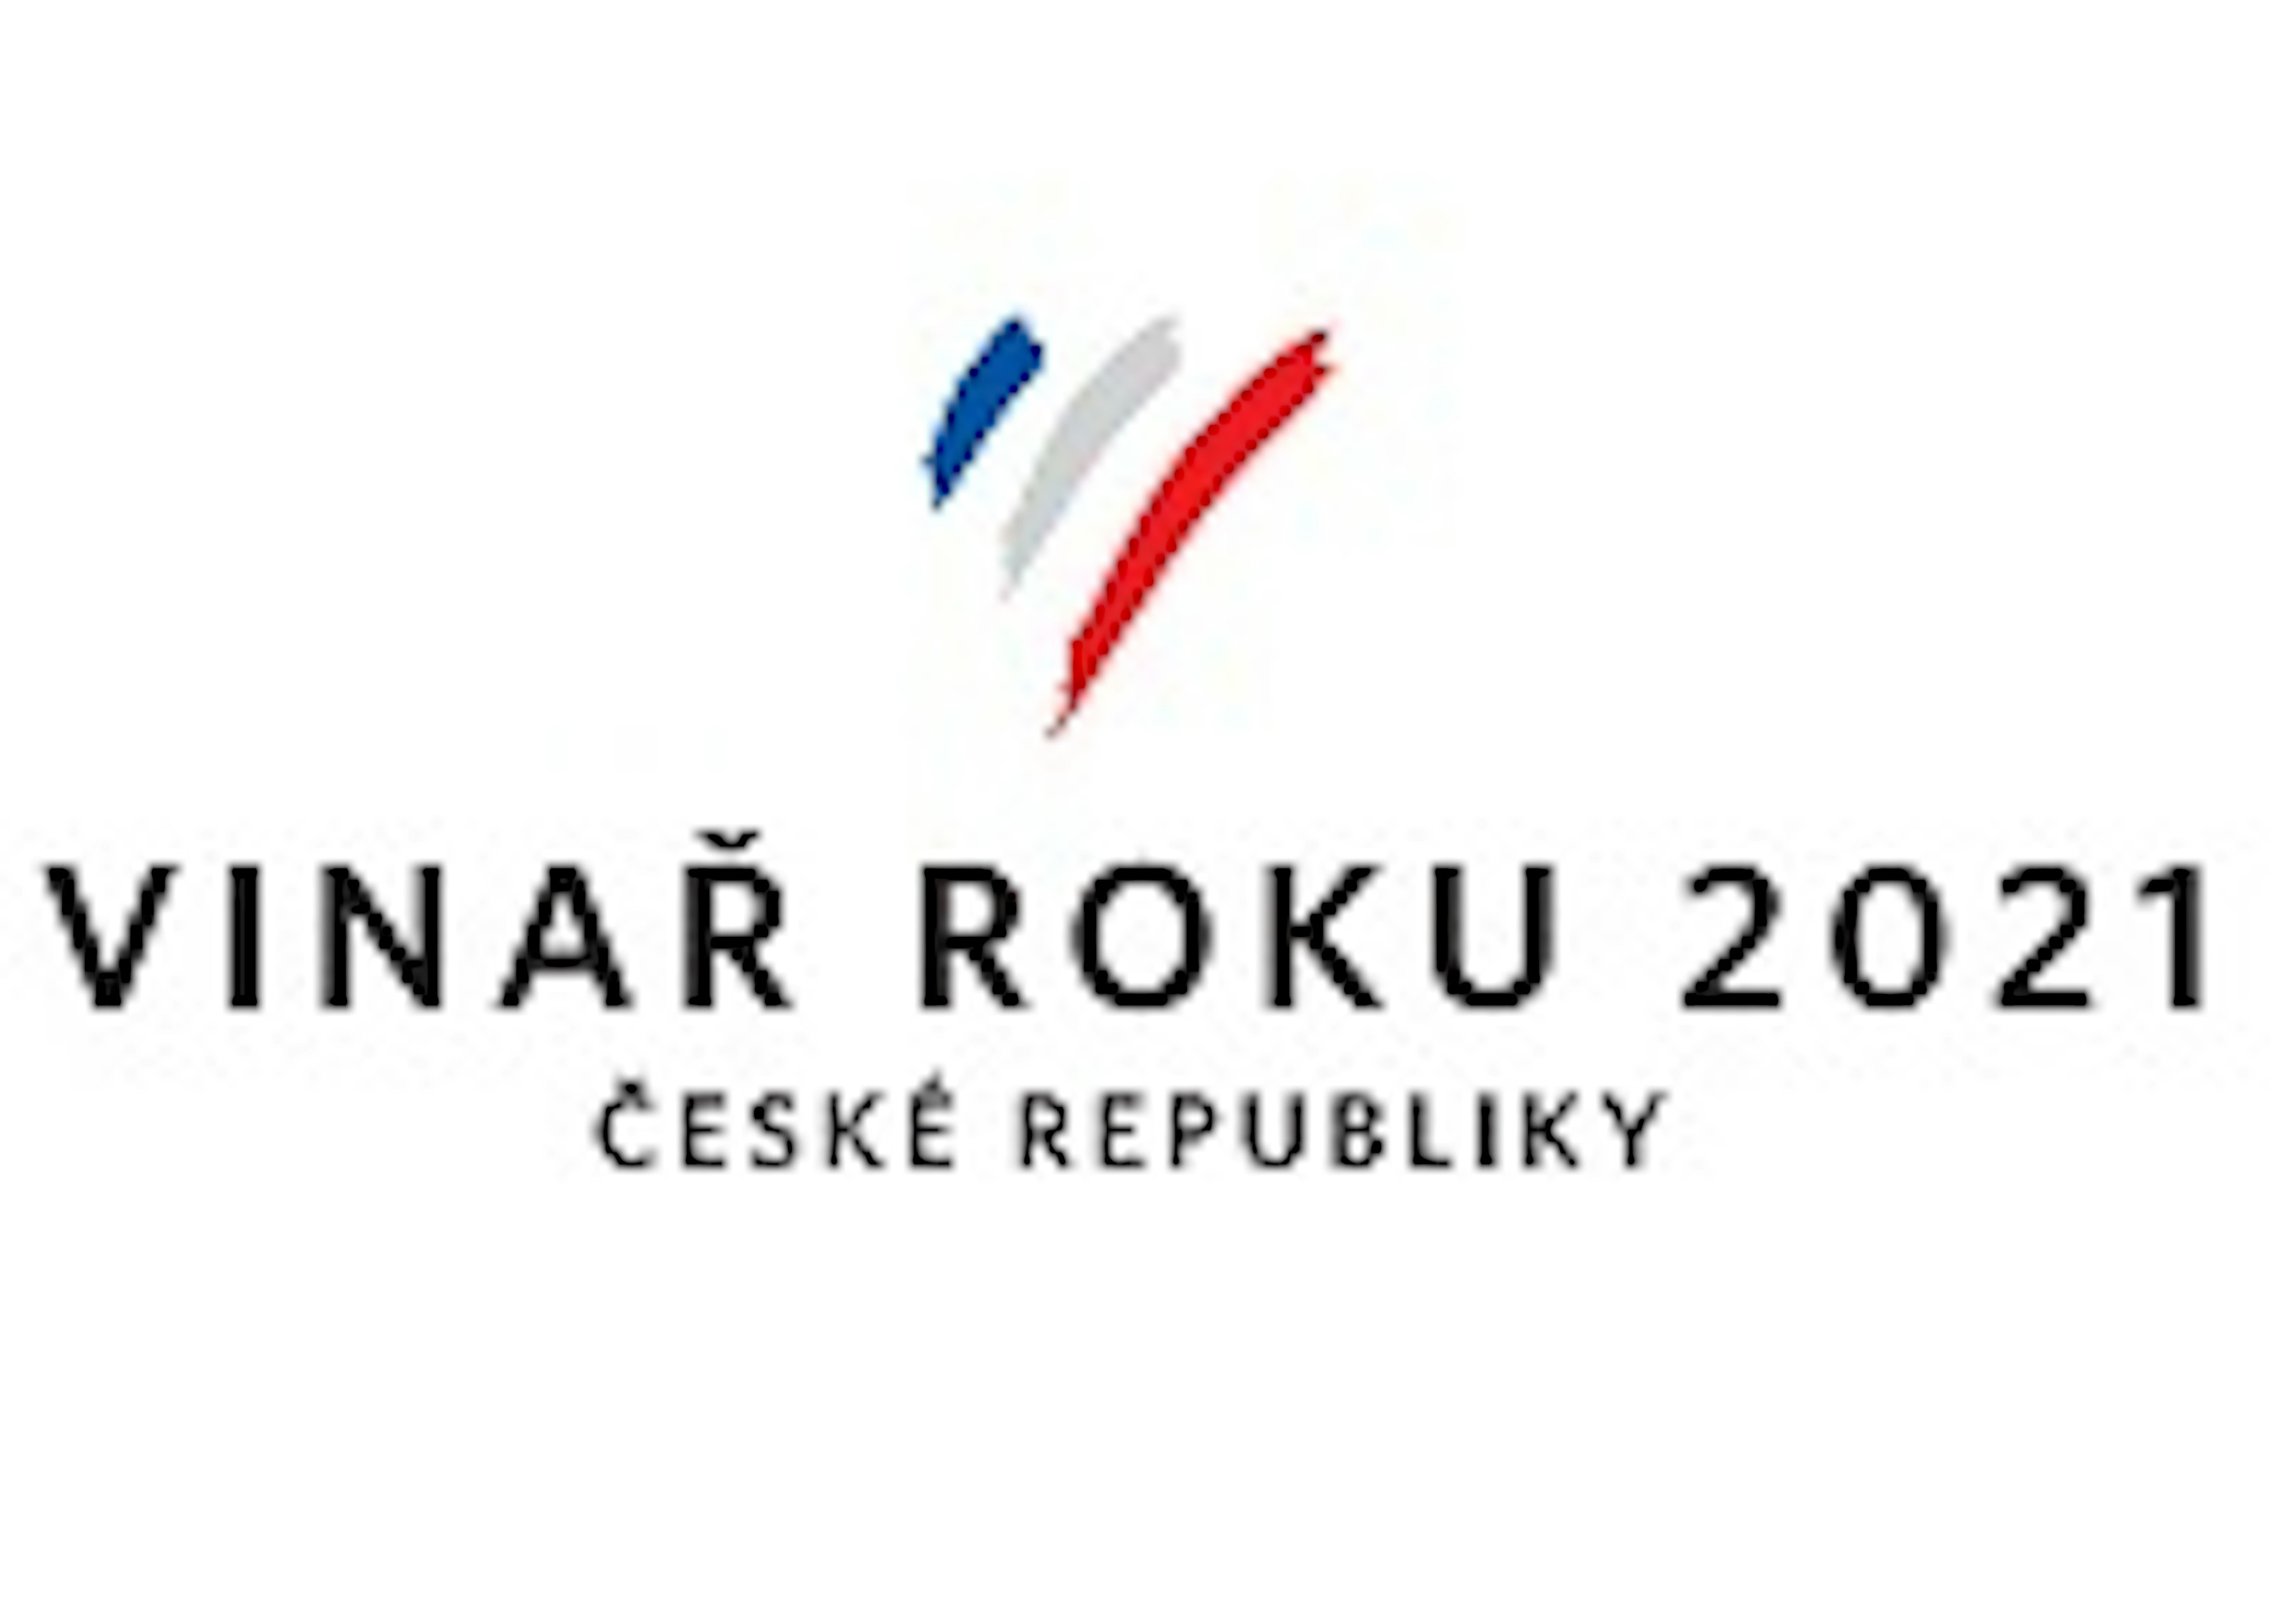 Vinař roku 2021 logo